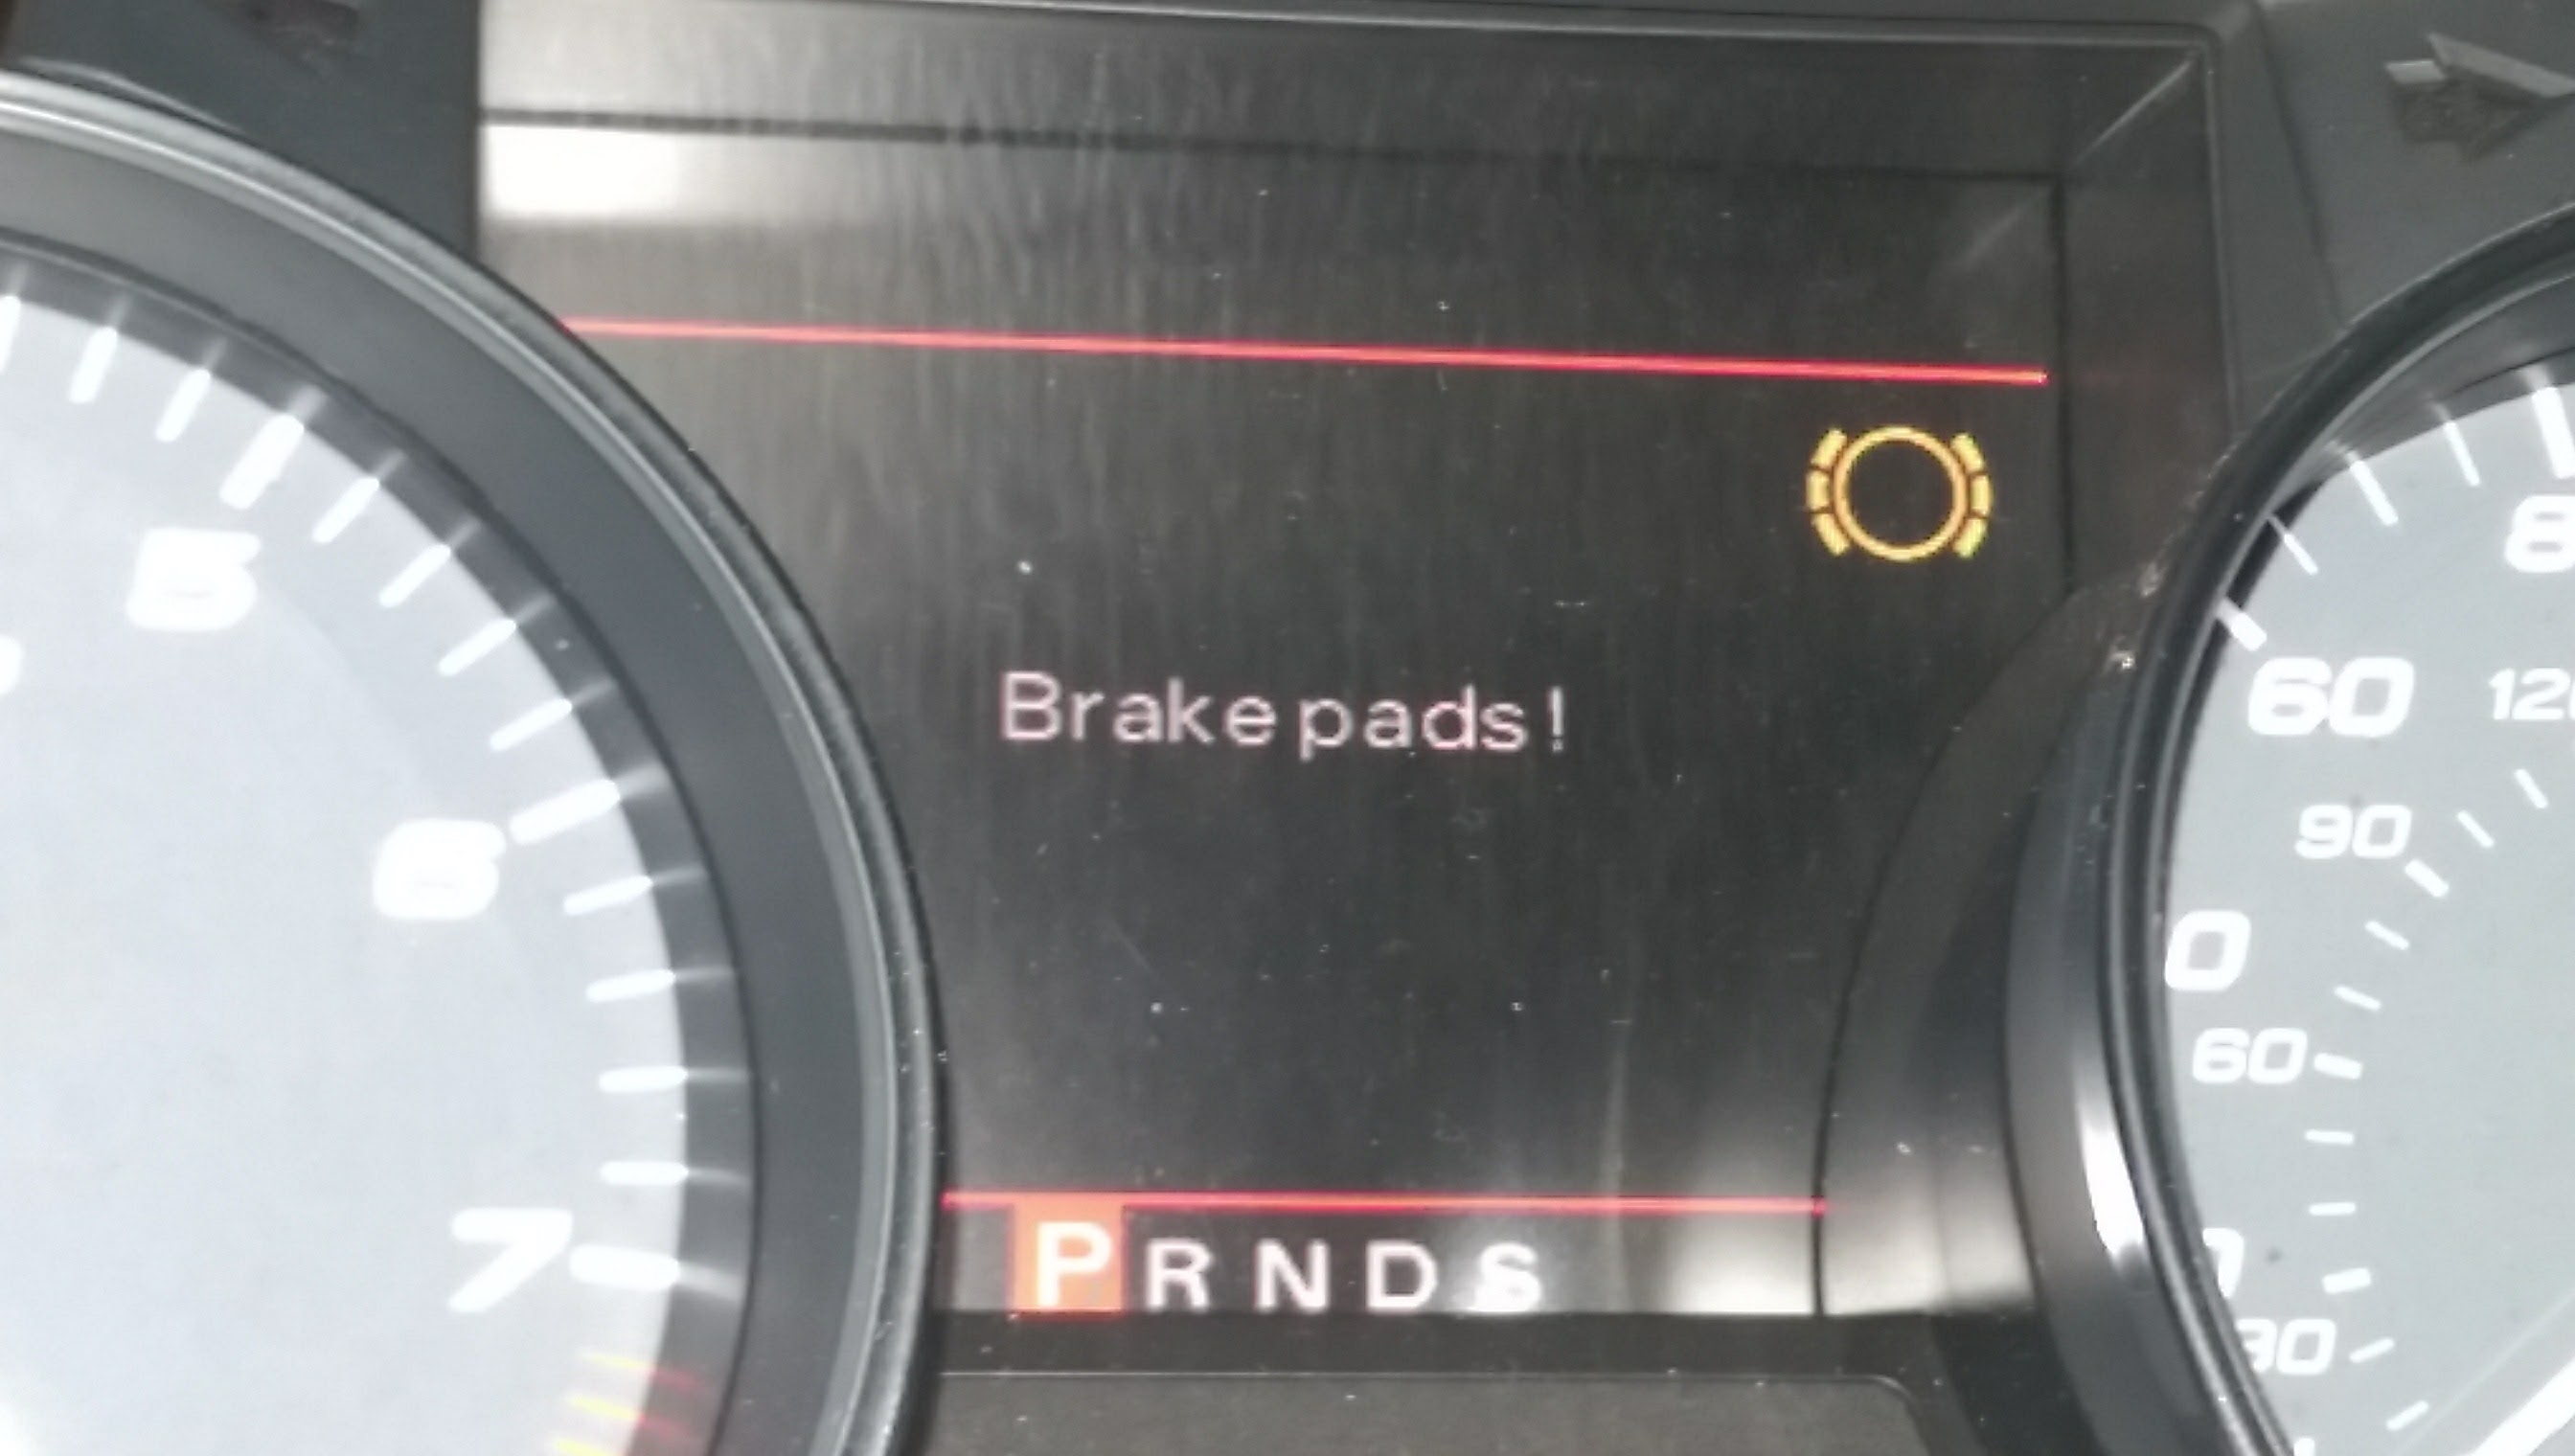 Audi brake pads worn indicator forex warren buffett two rules of investing